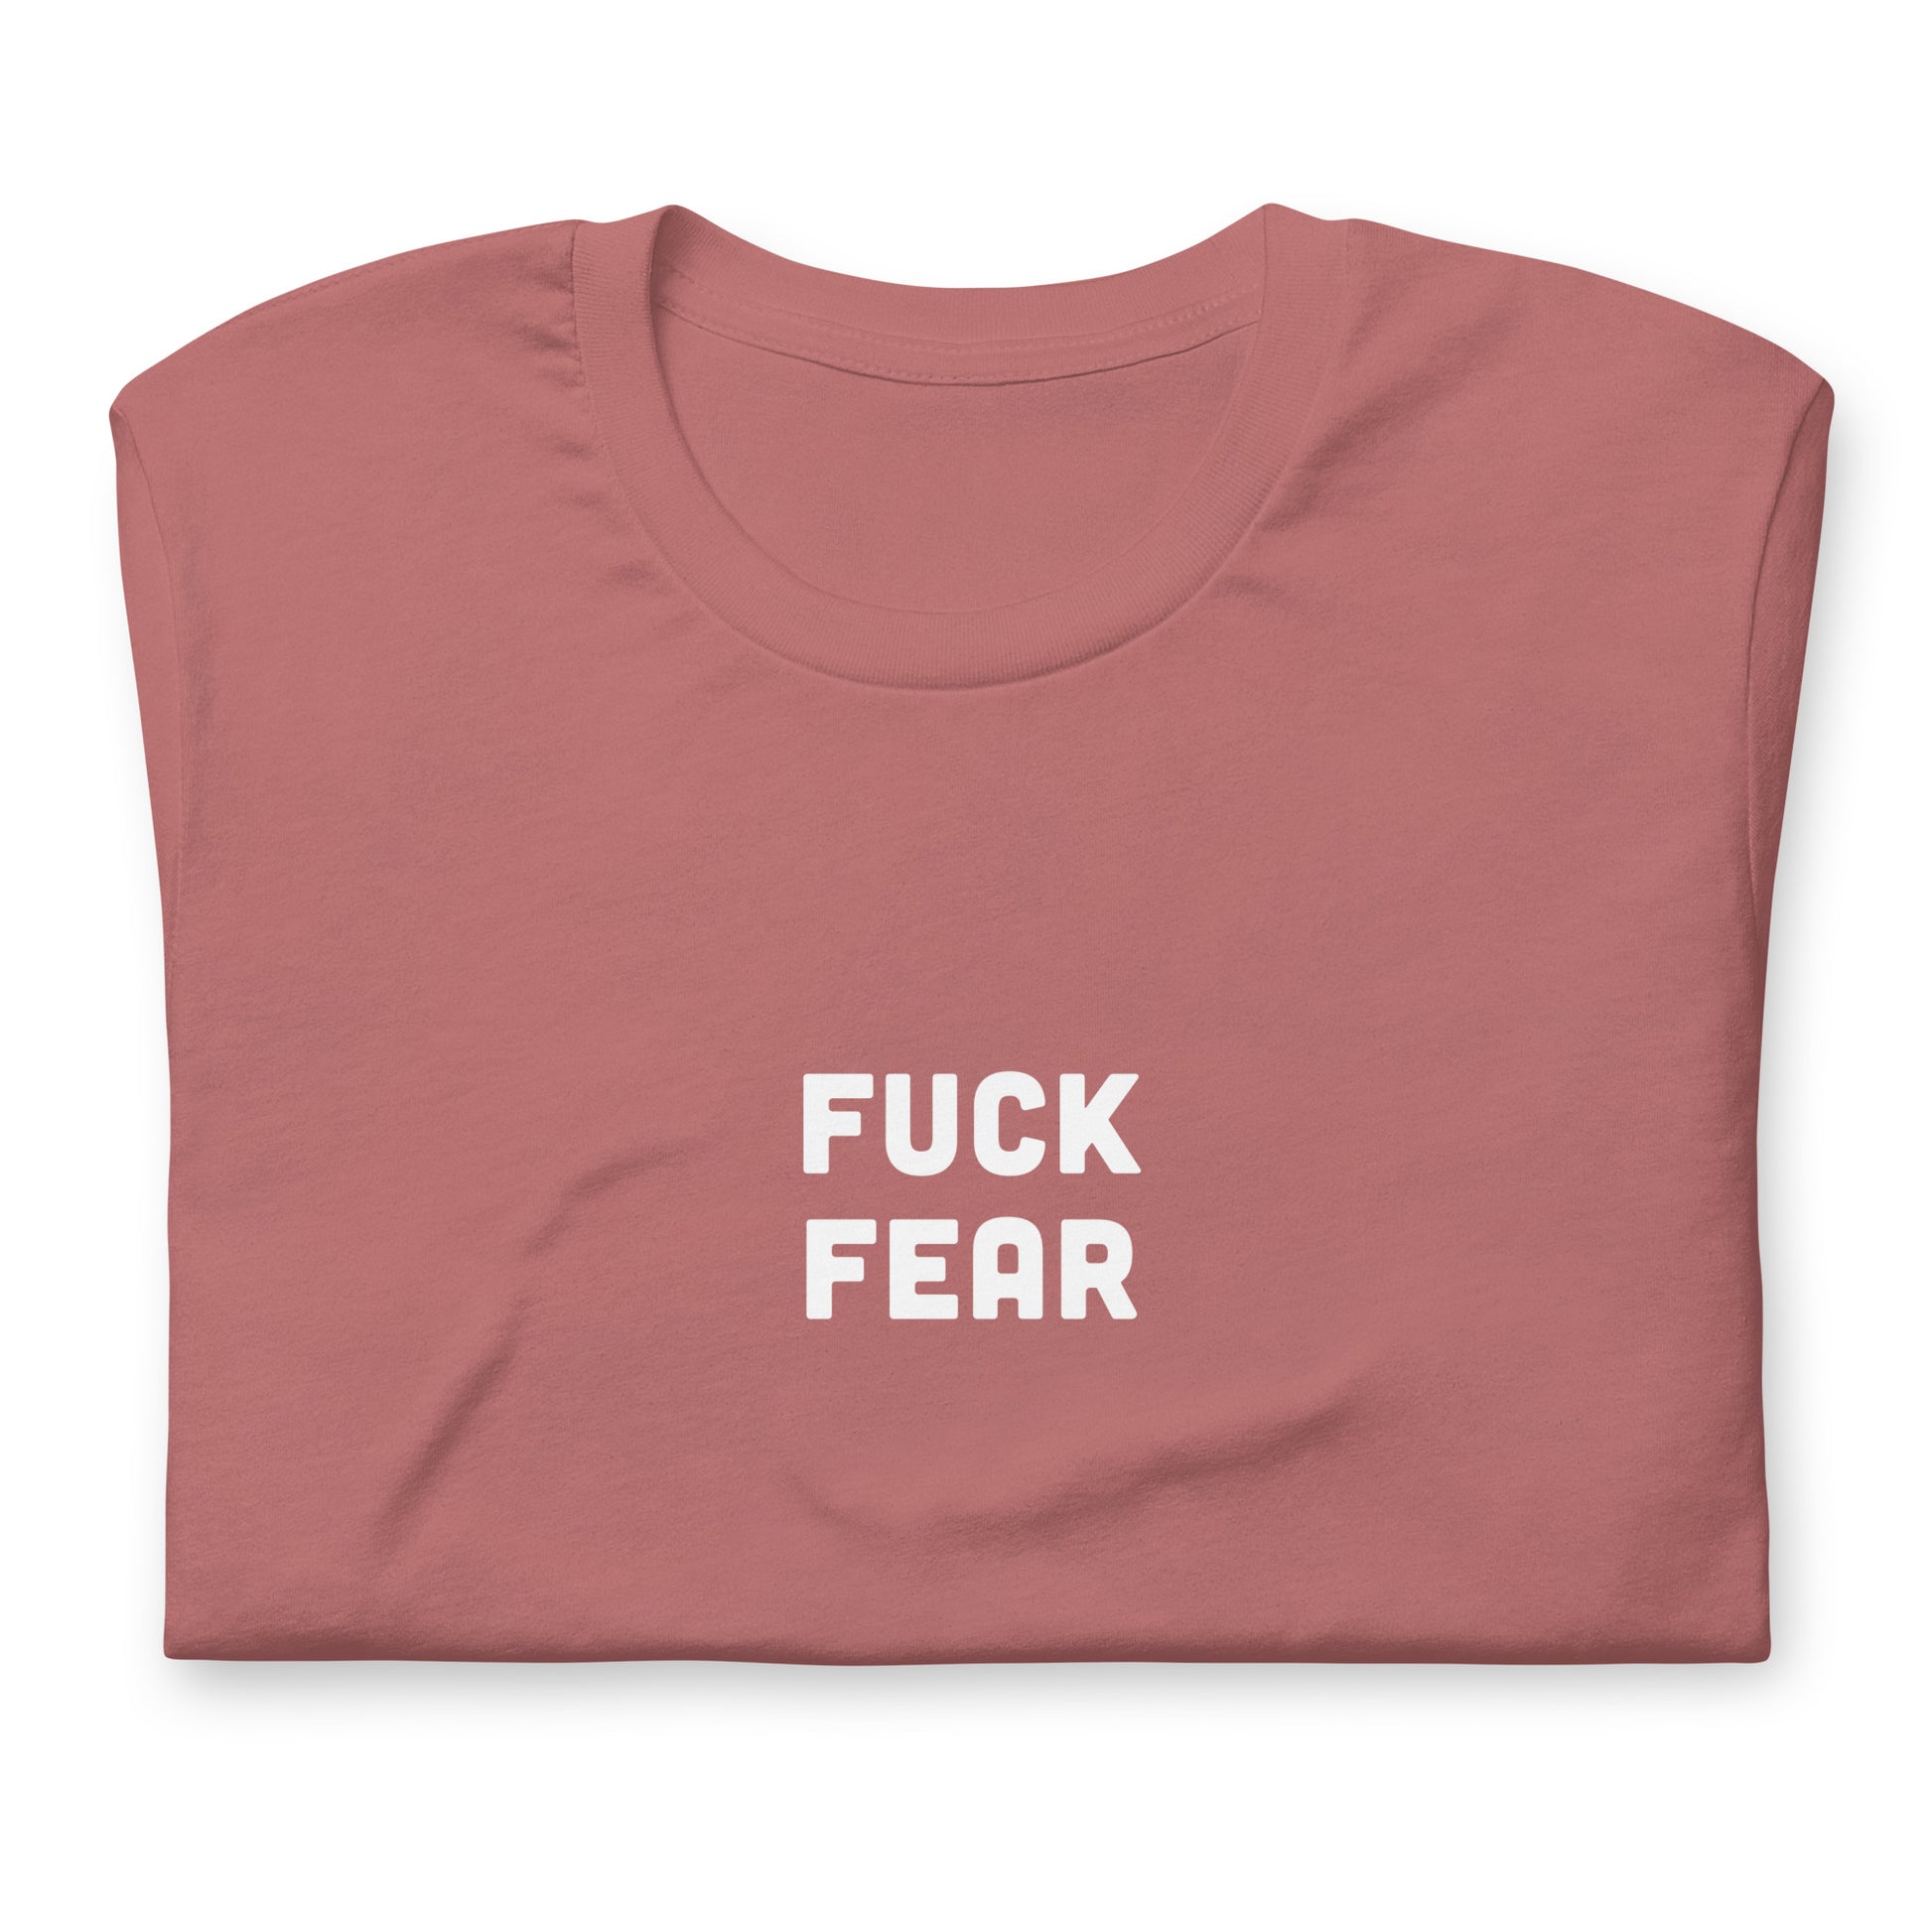 Fuck Fear T-Shirt Size 2XL Color Navy